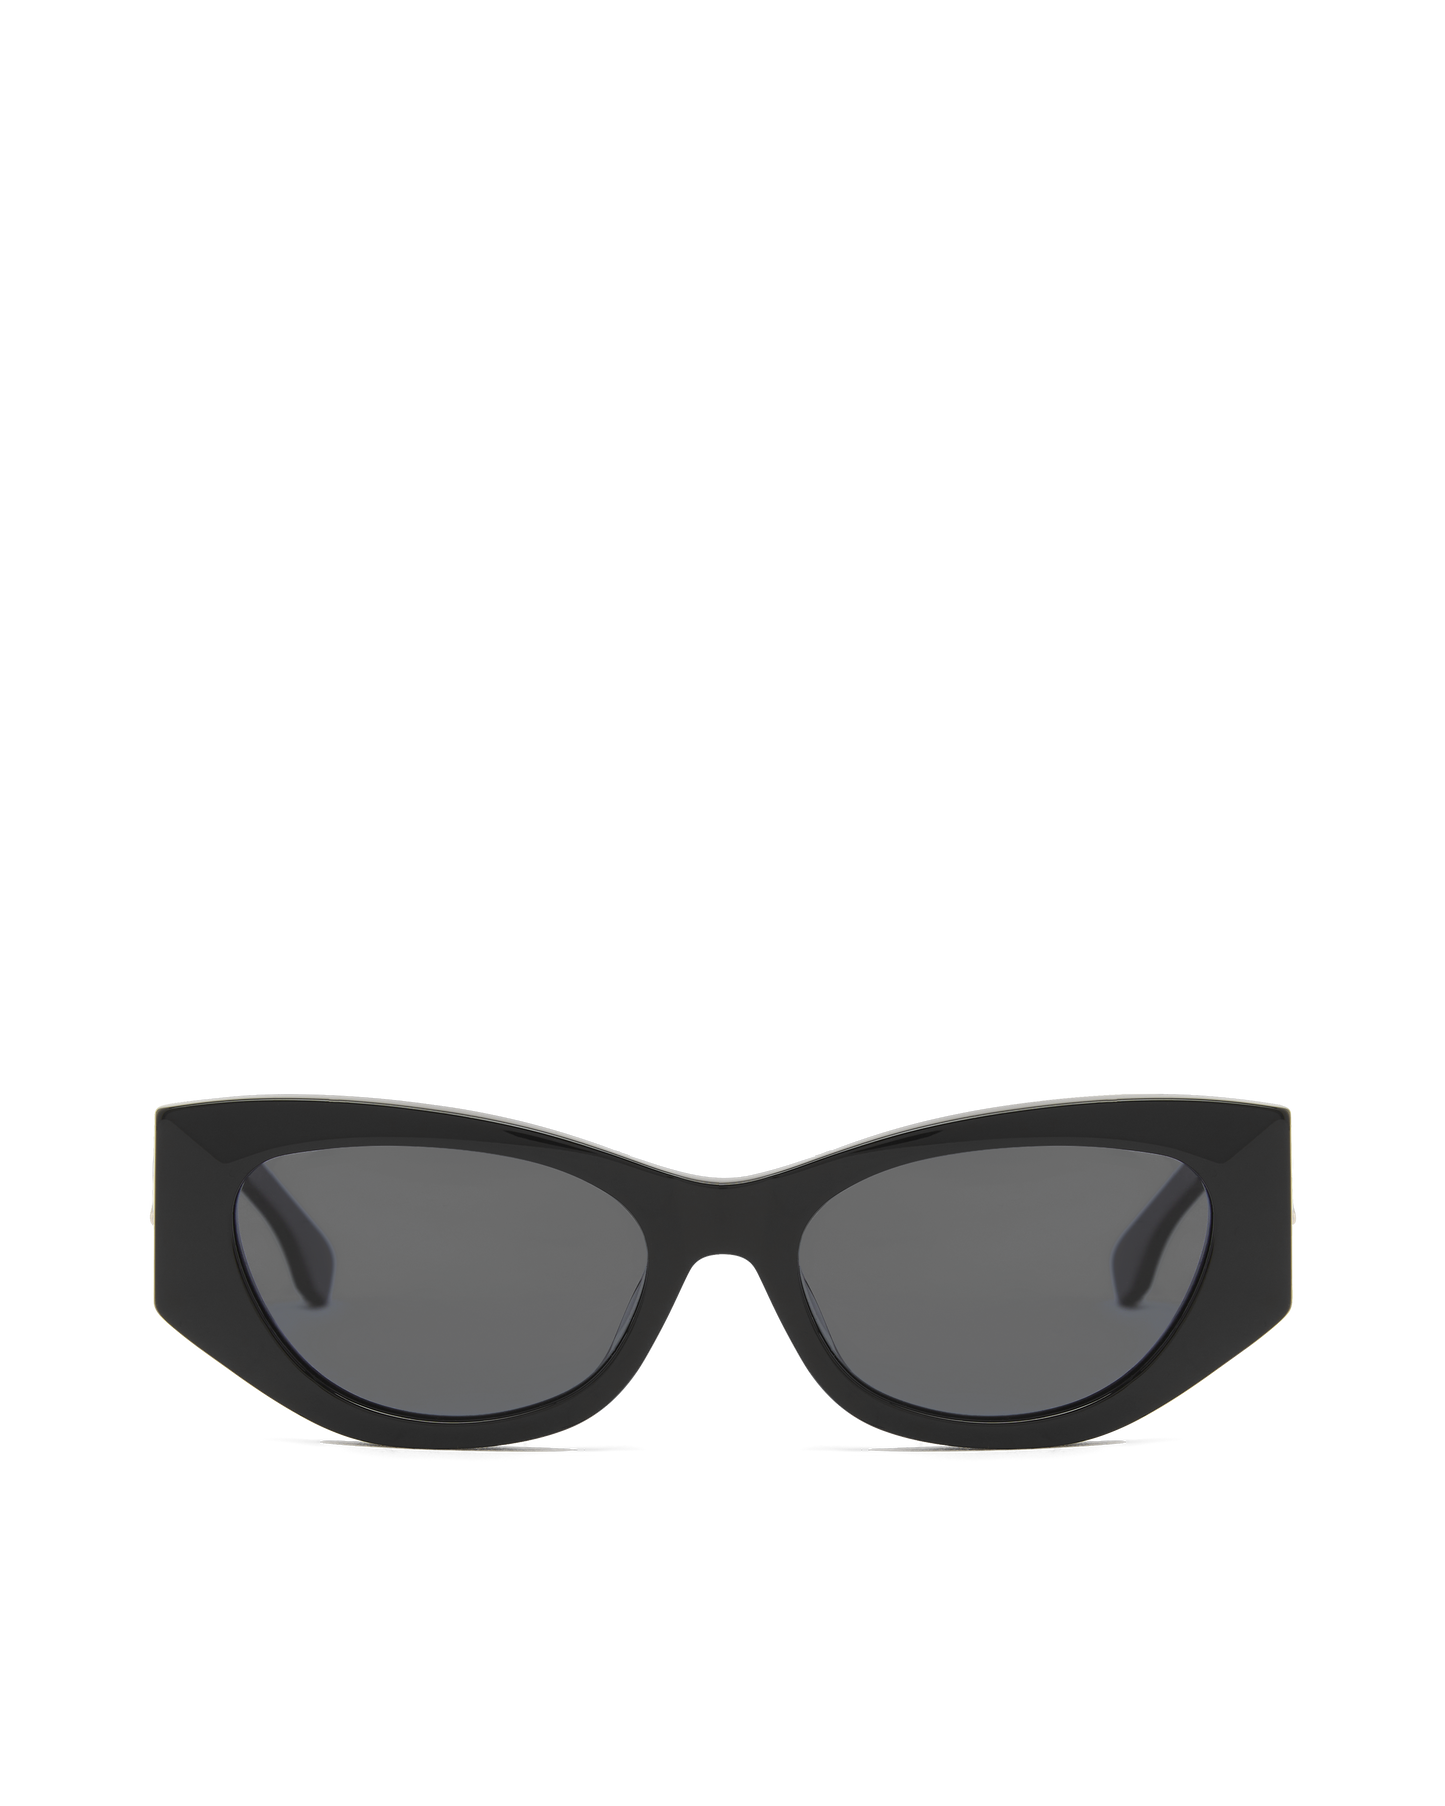 classic black acetate cat eye sunglasses